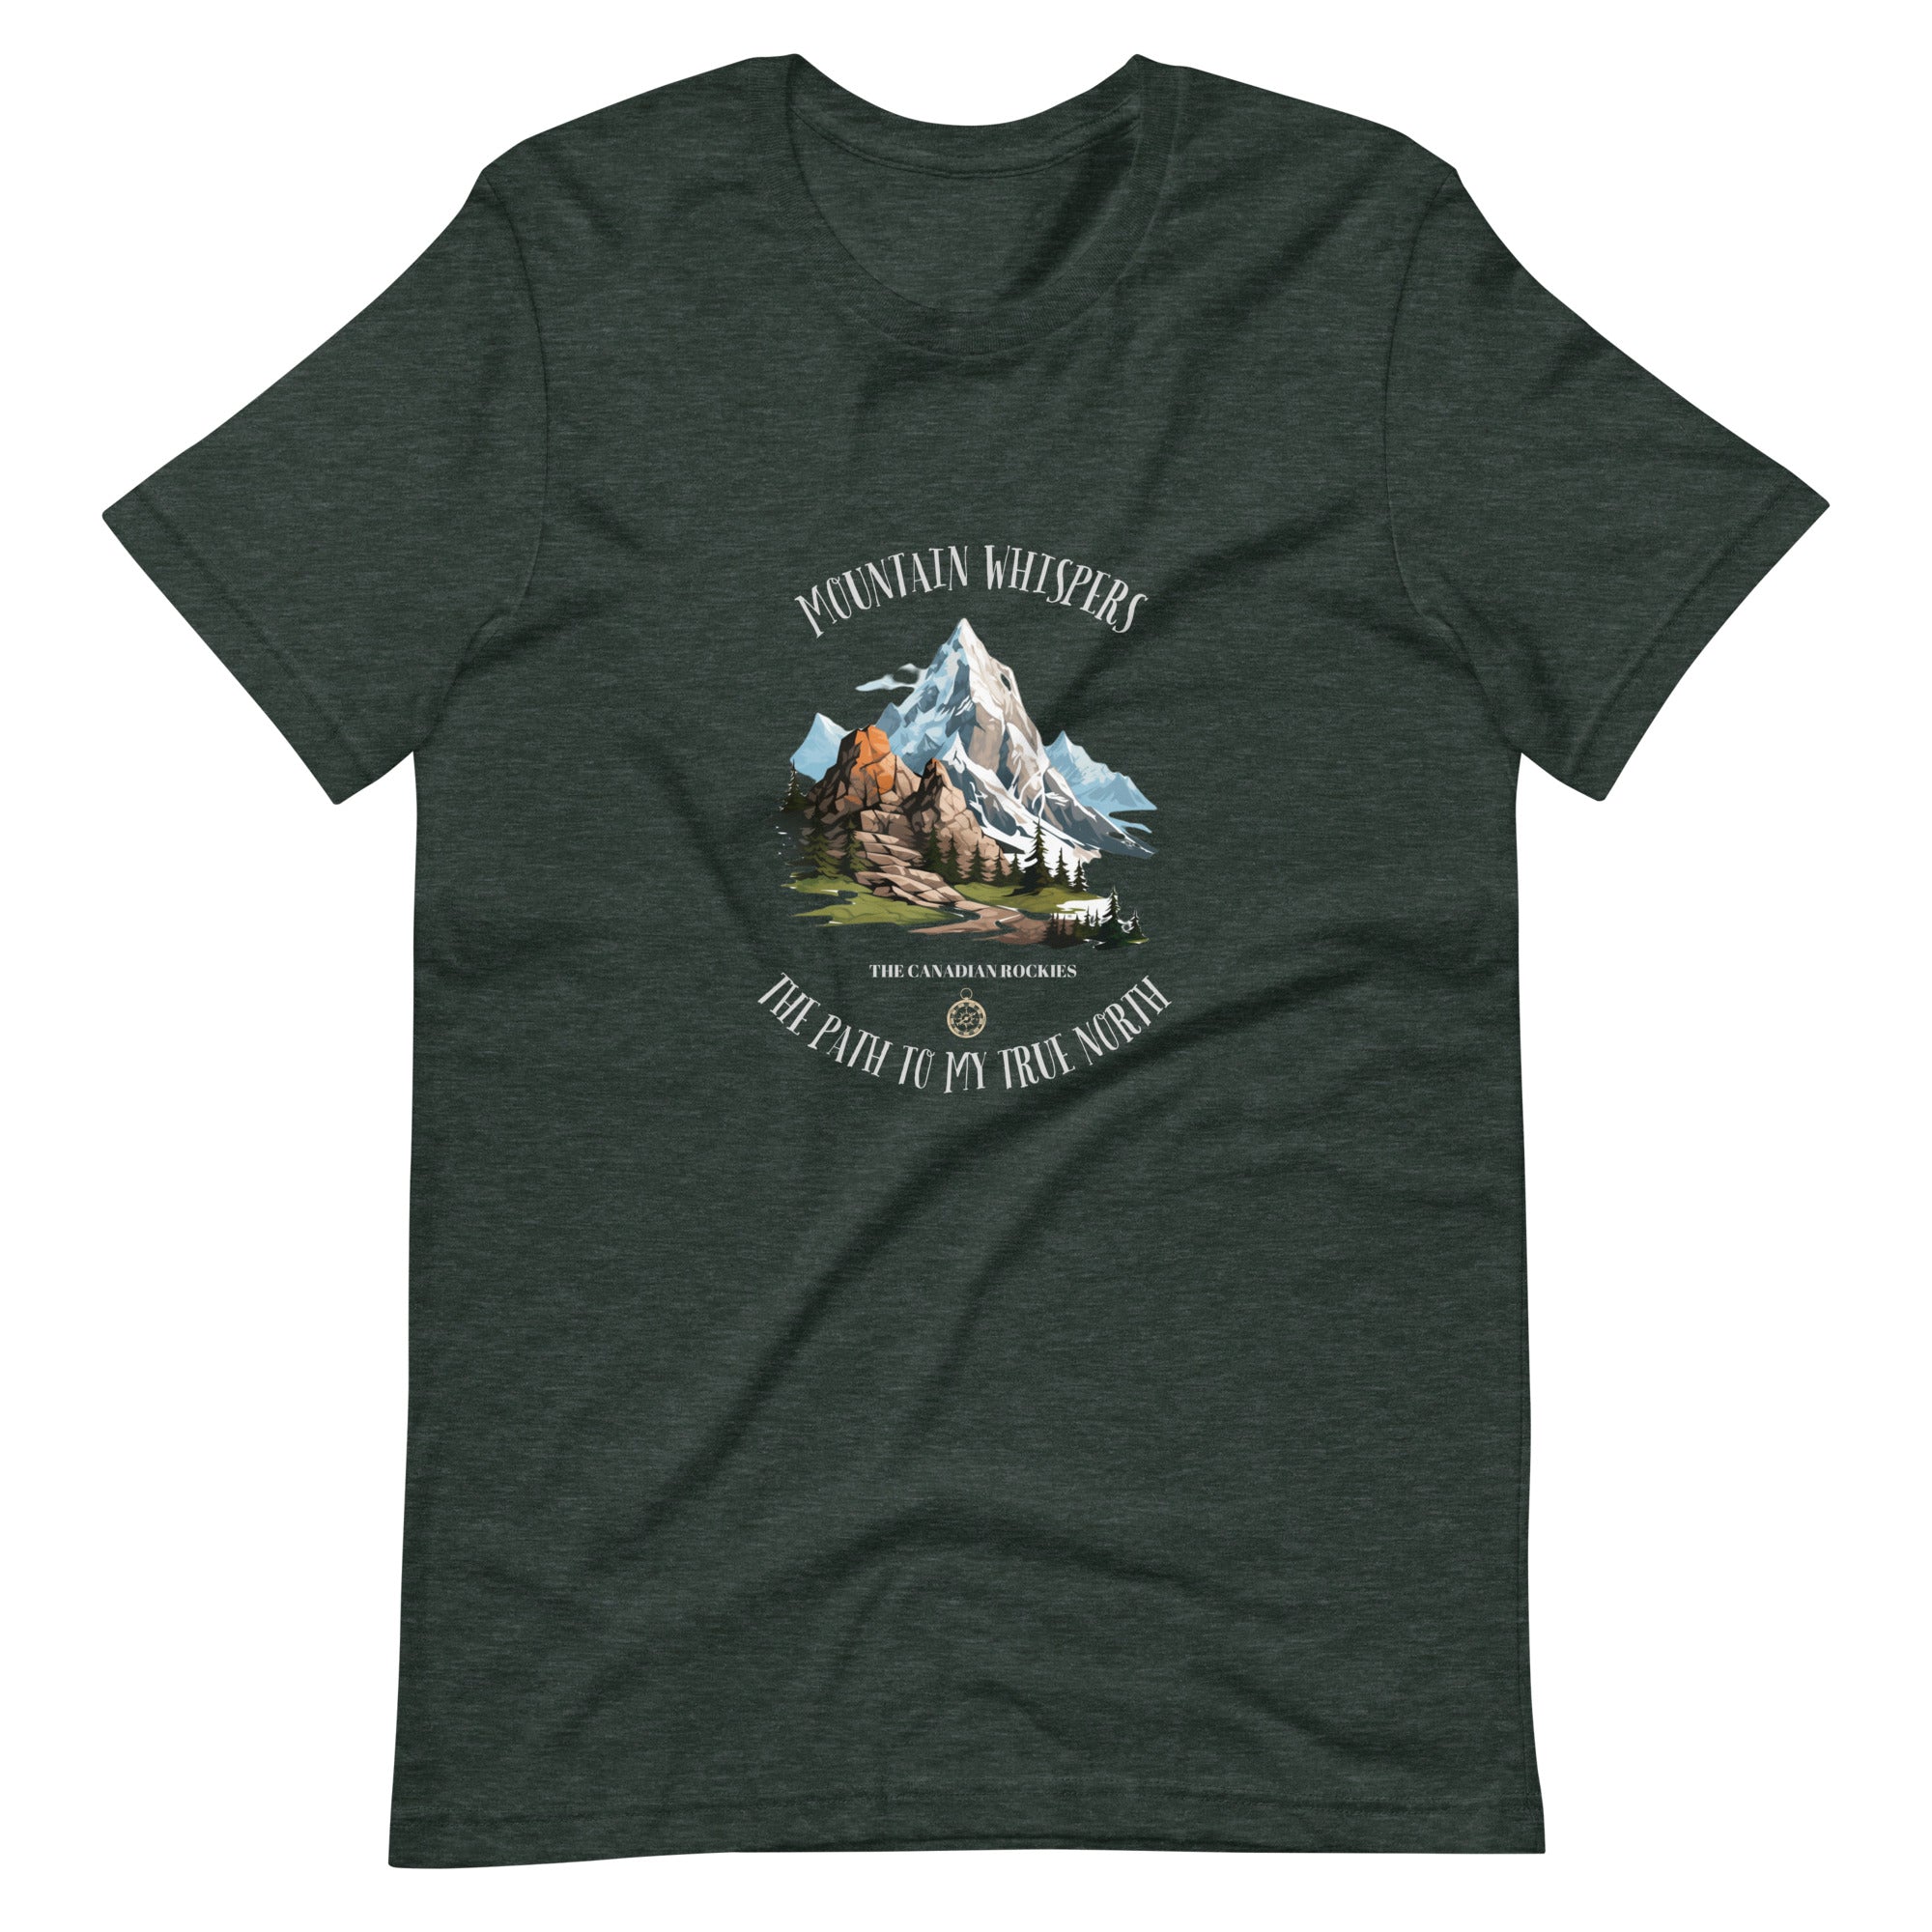 Rocky Mountain My True North Unisex t-shirt